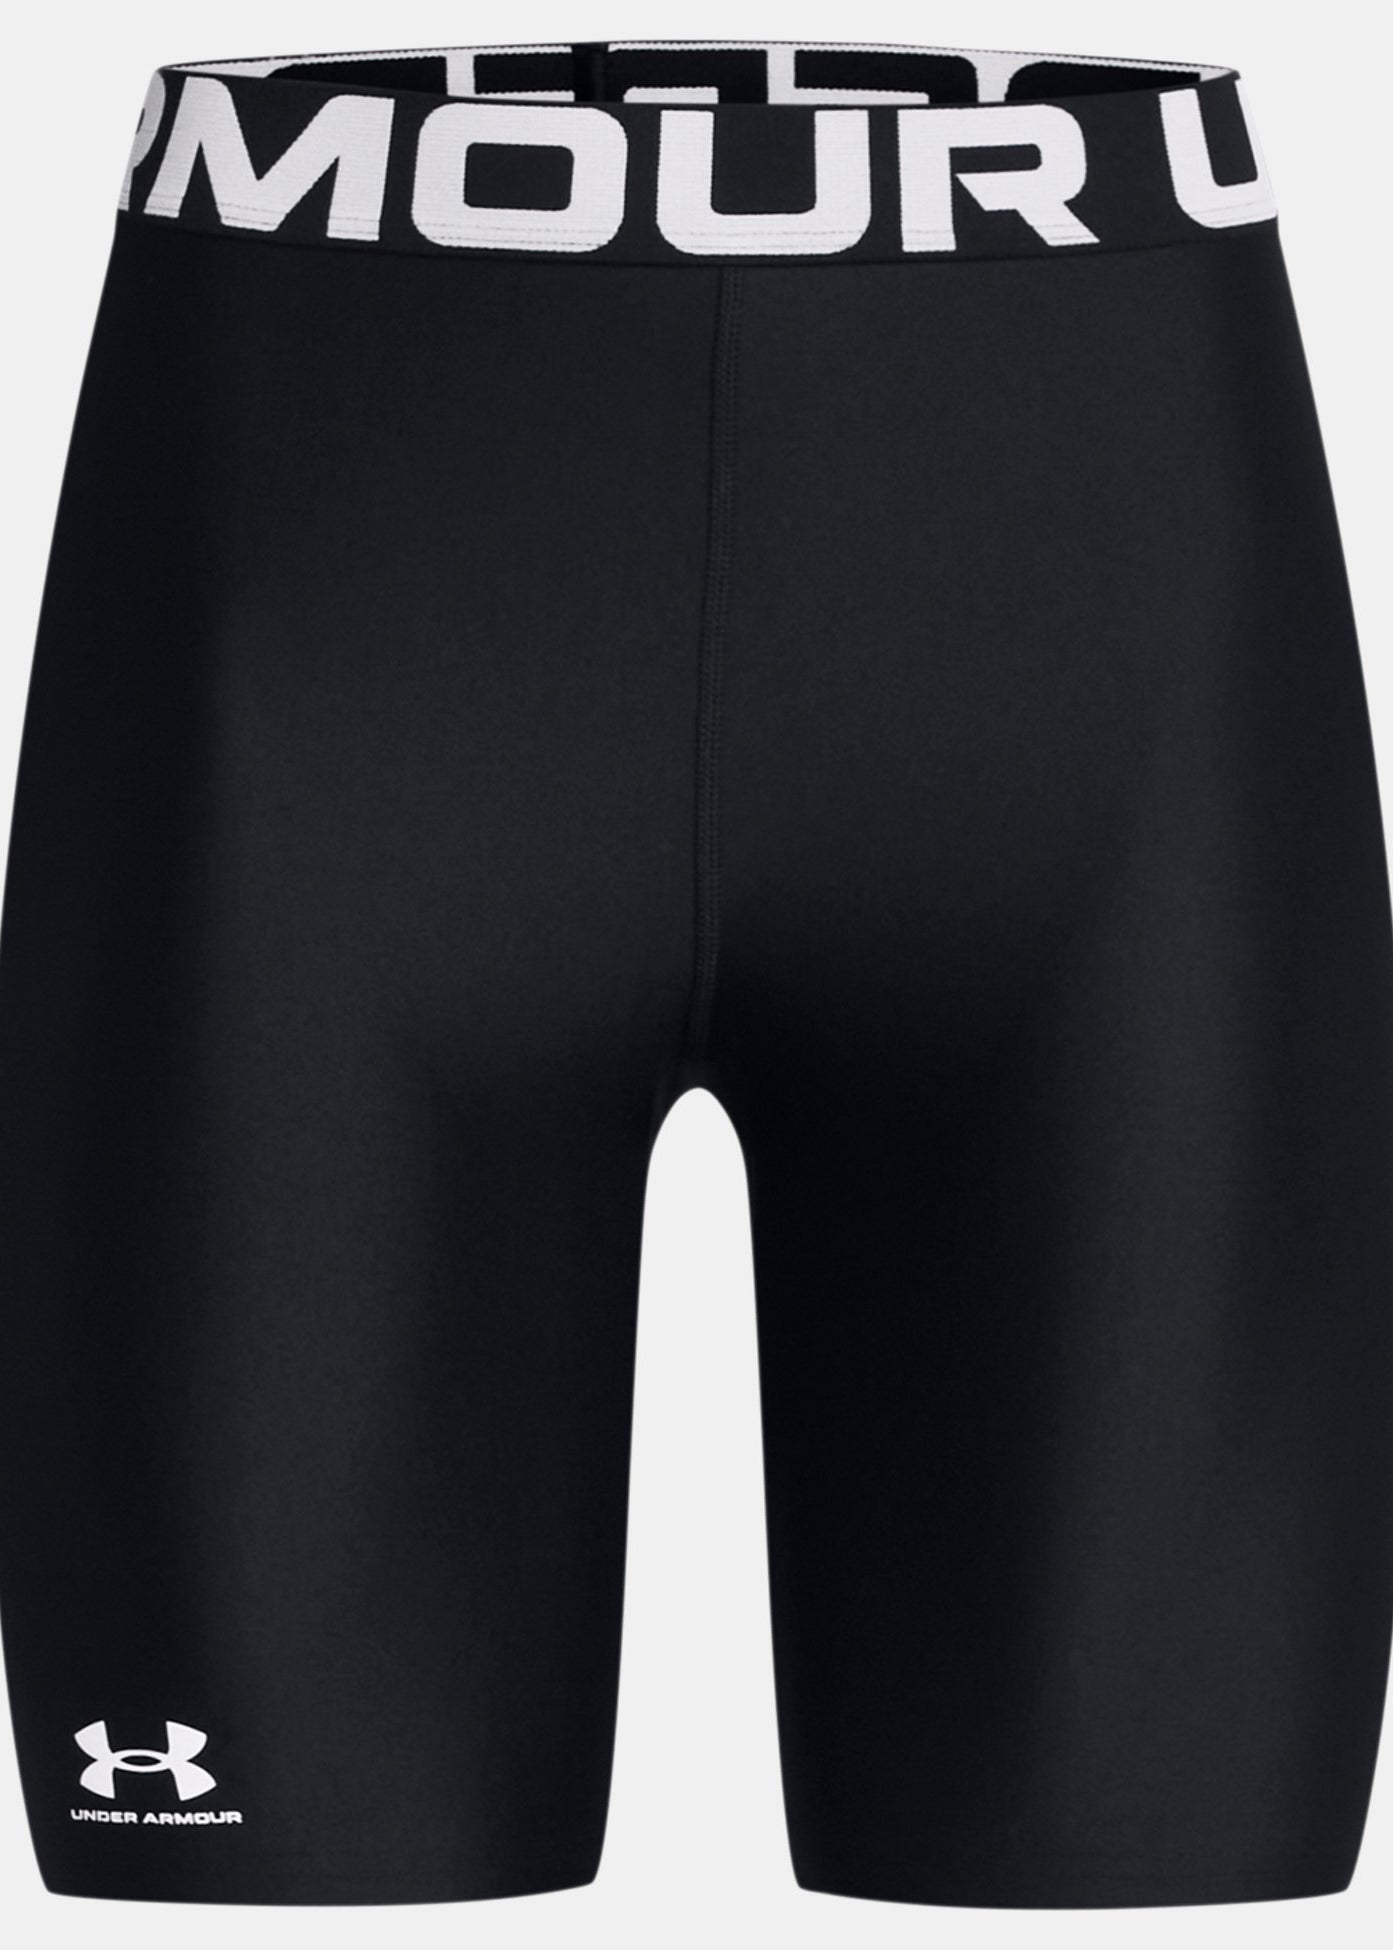 Under Armour Authentics 8in Shorts - Black - for kvinde - UNDER ARMOUR - Shorts